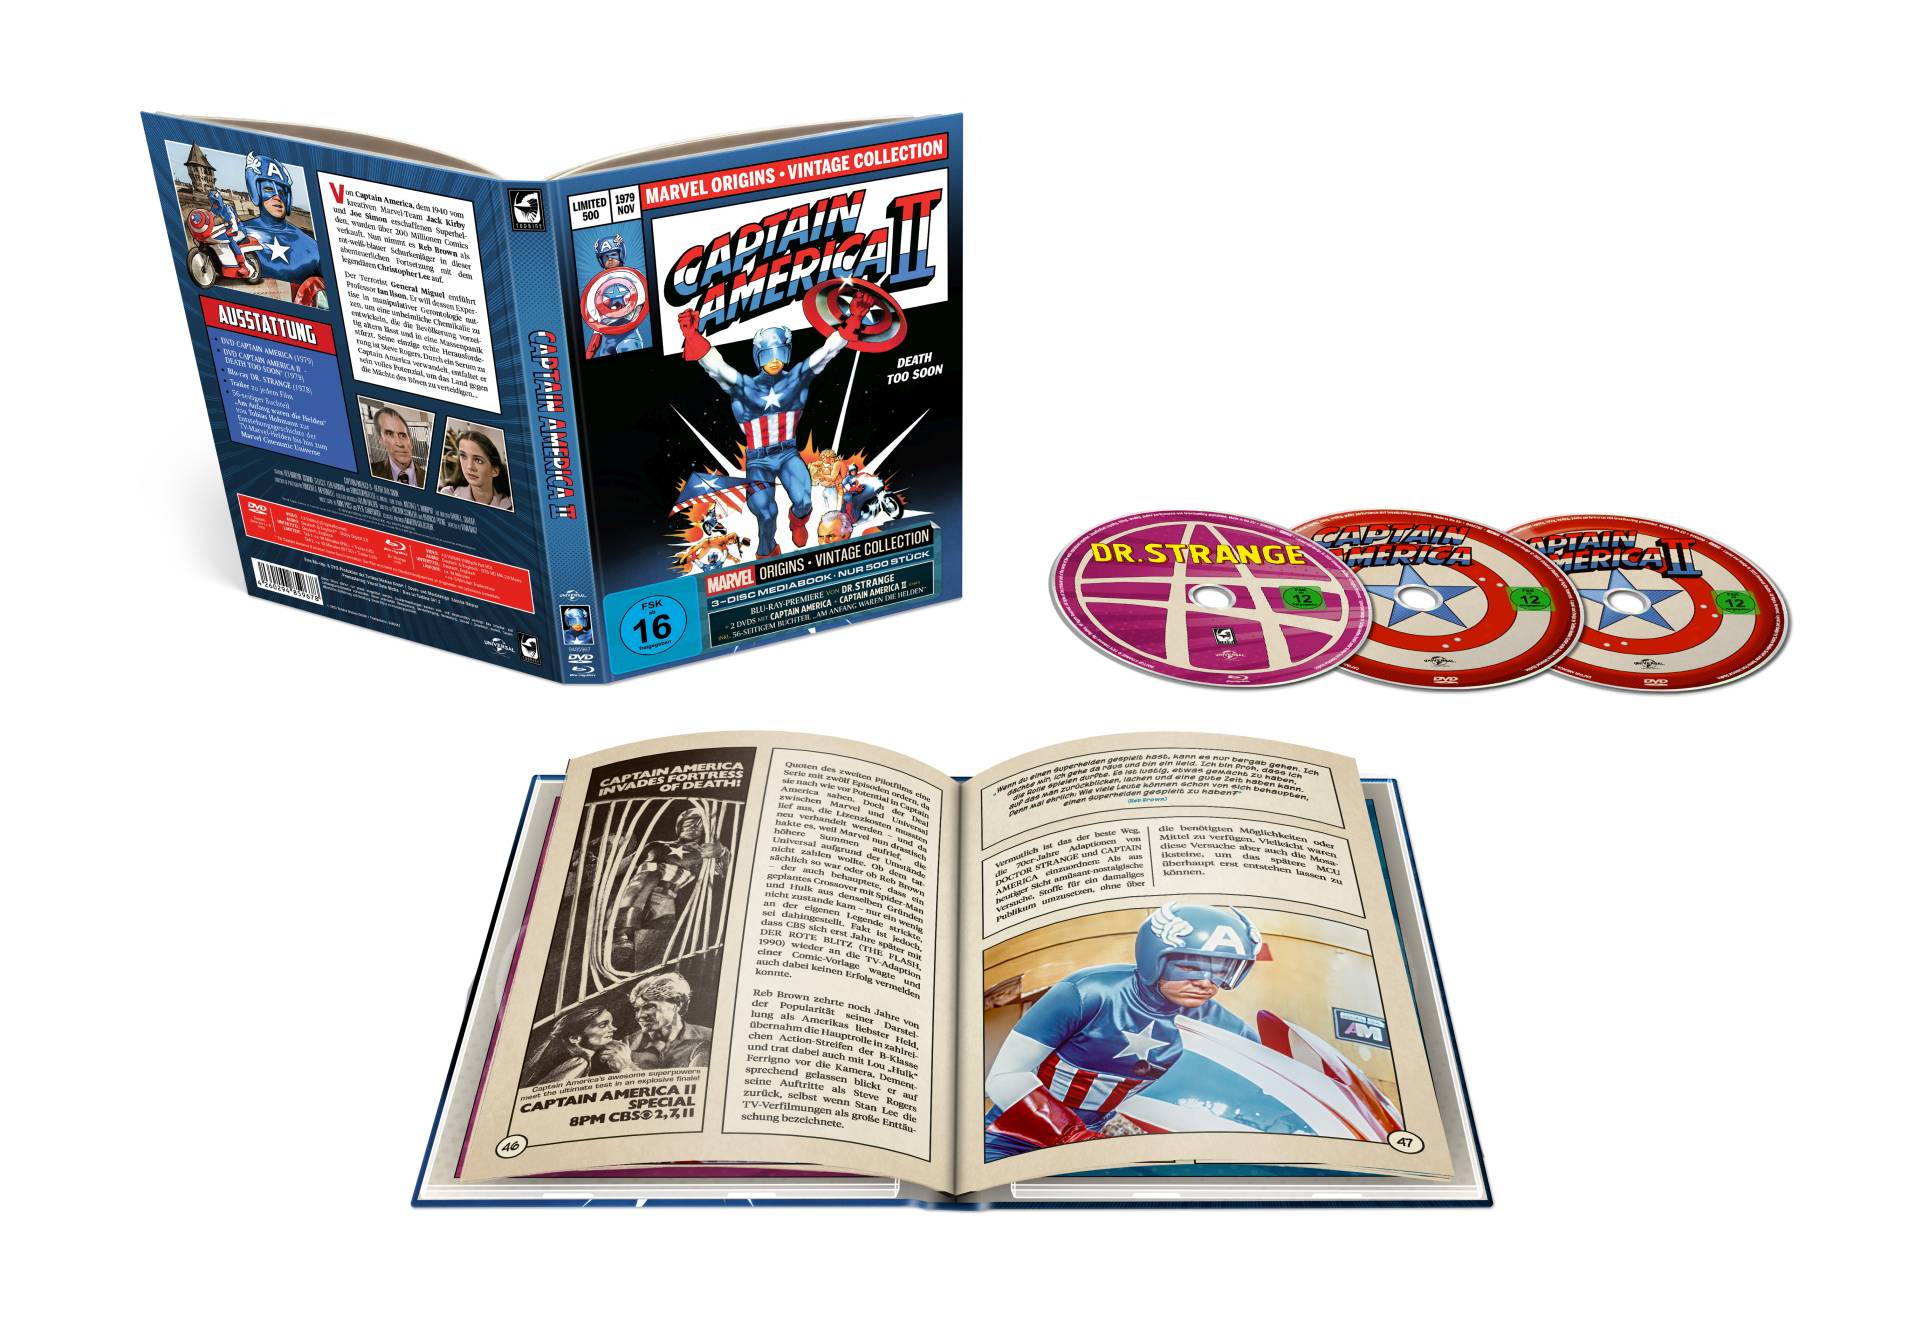 Marvel Origins | Captain America I+II + Dr. Strange | Mediabook (BD + 2x DVD) Cover C - 500 Stück